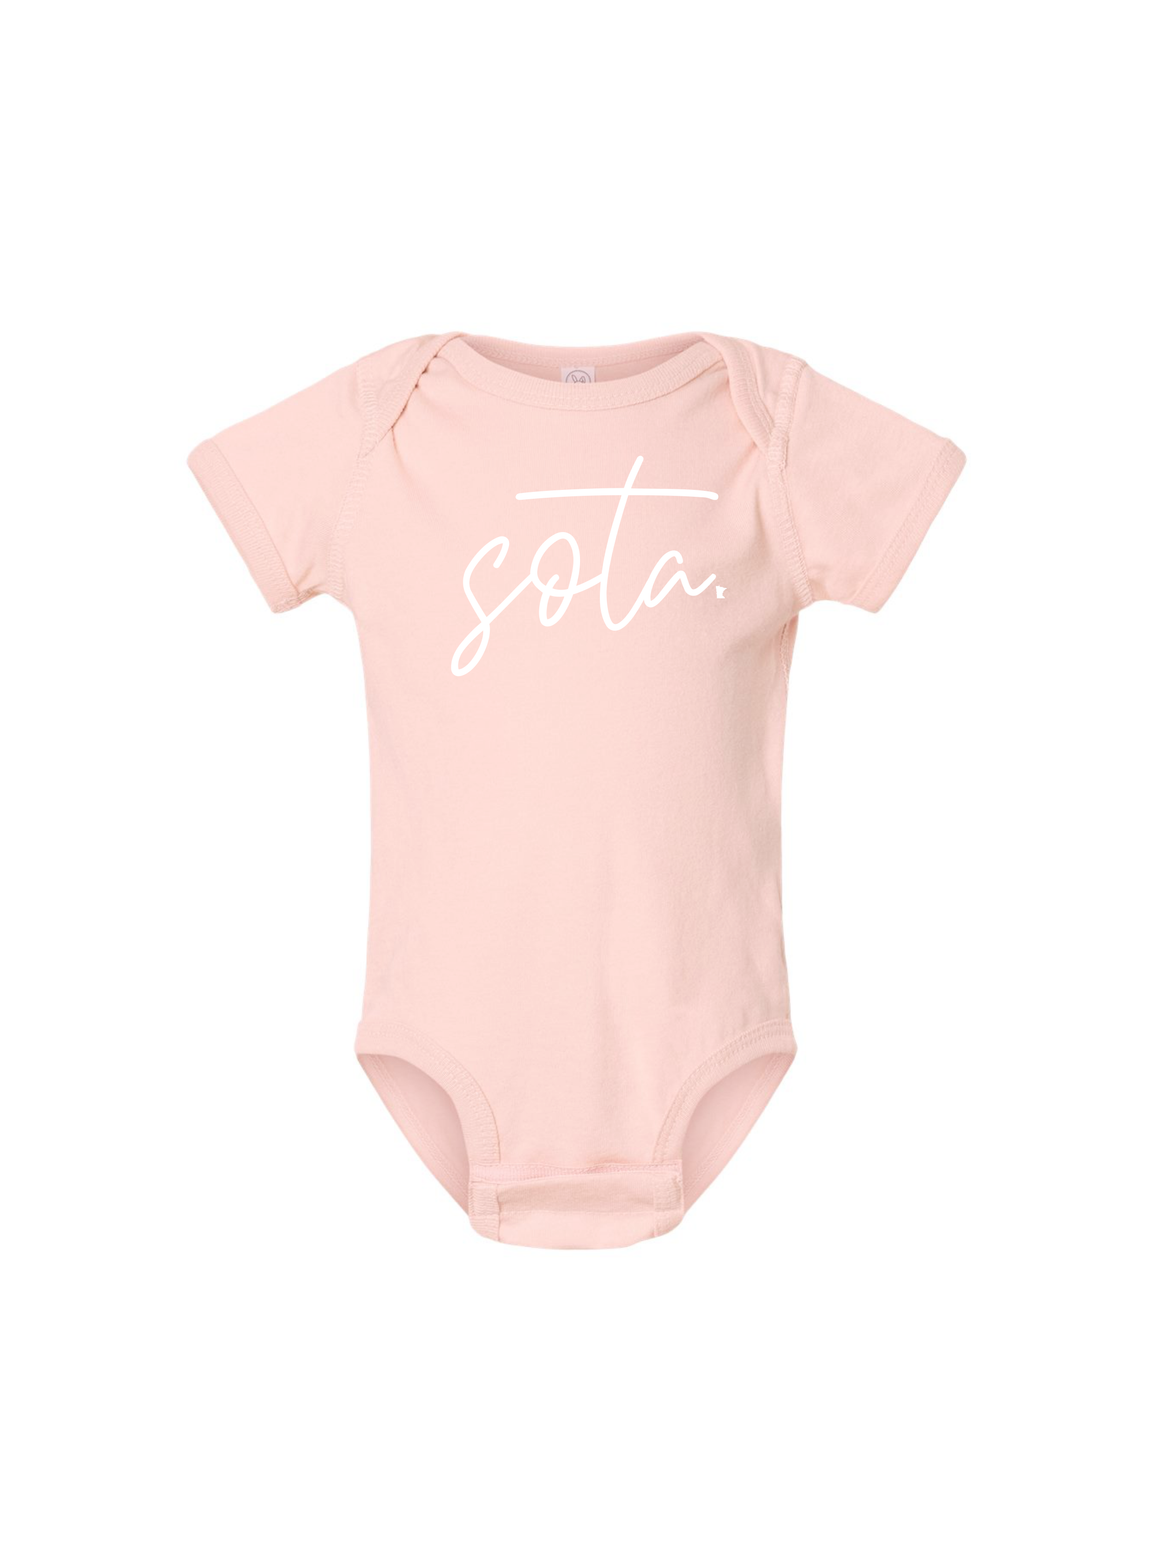 Baby Sota Onesie [lt. pink] - Northern Print Co.